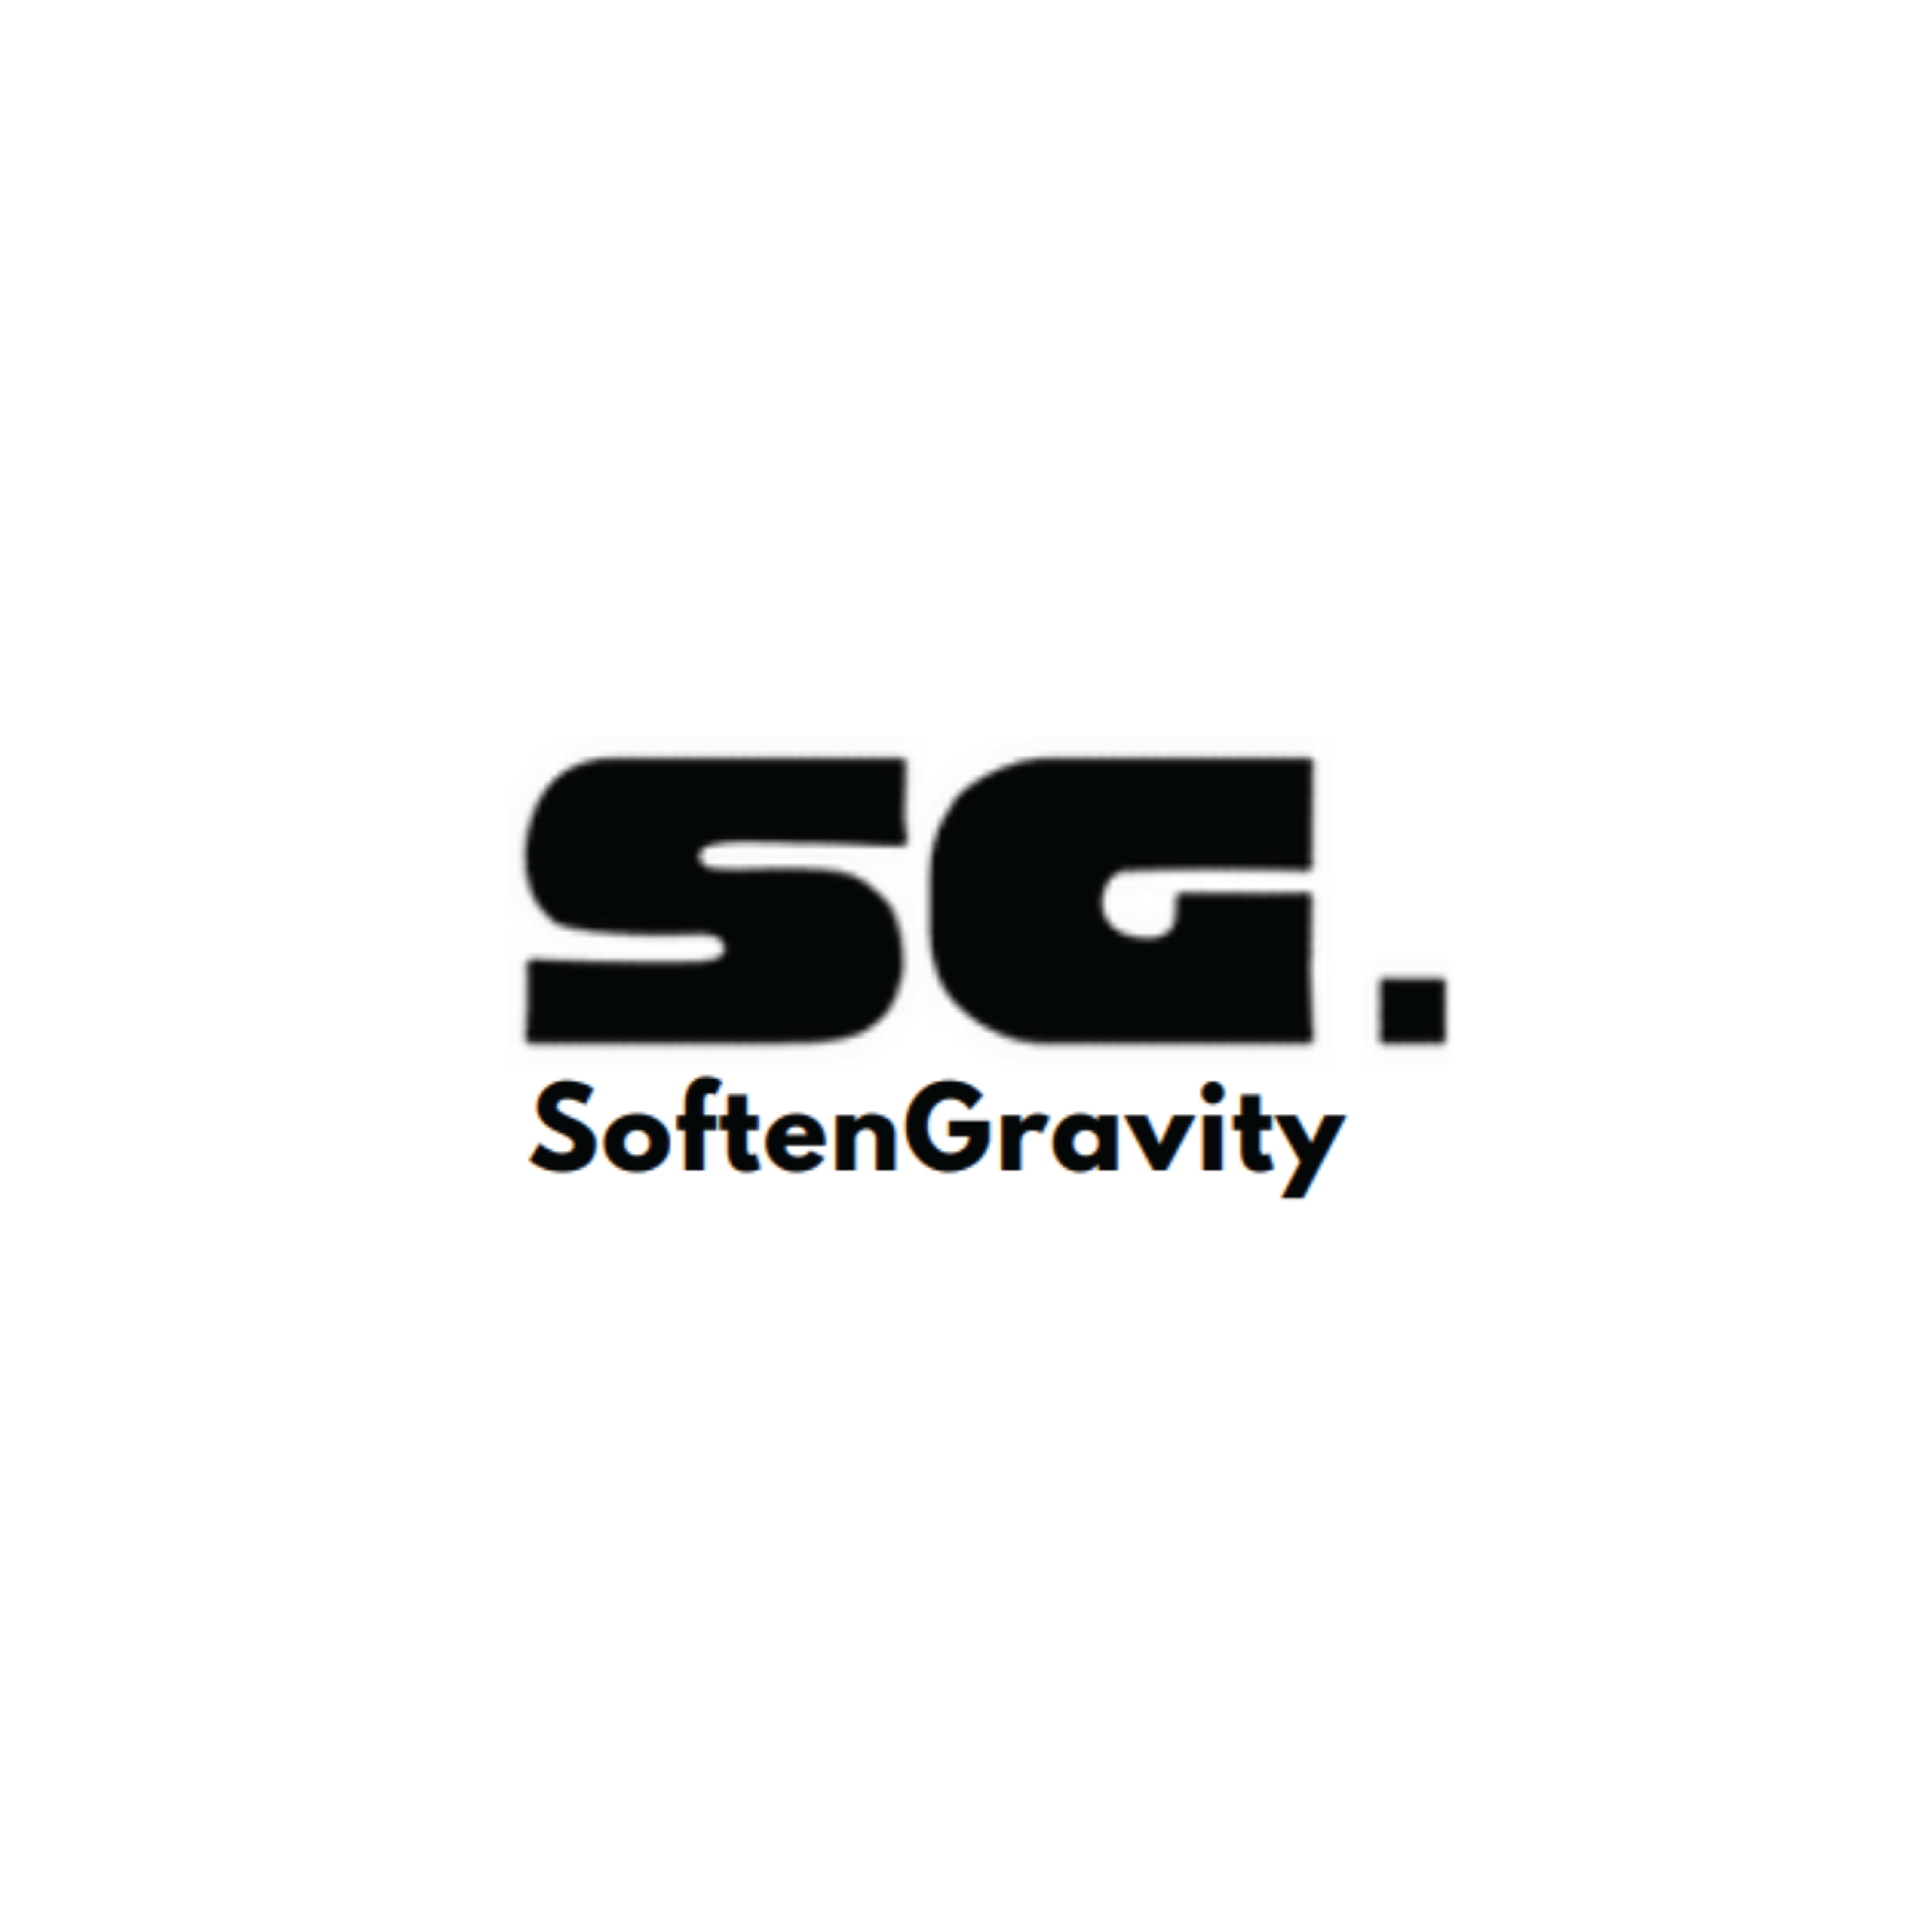 SoftenGravity